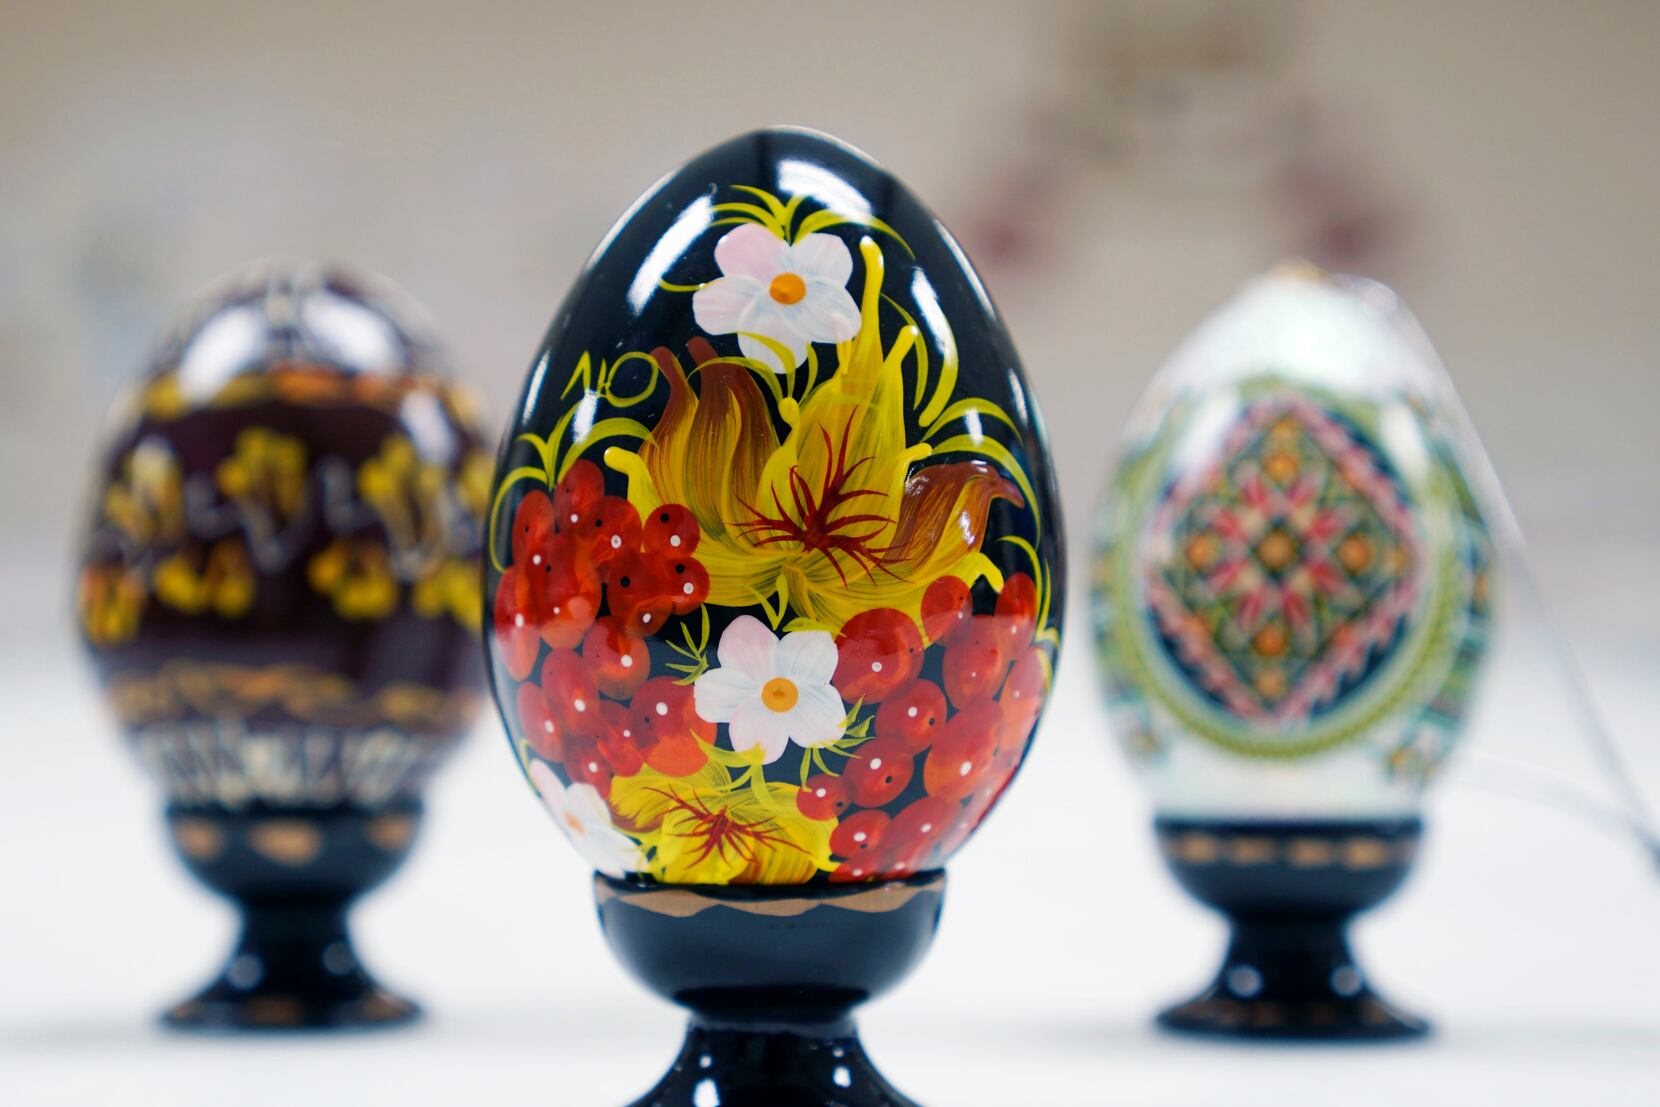 The Ukrainian Easter Egg: An Art & Letter Writing Activity- No real eggs